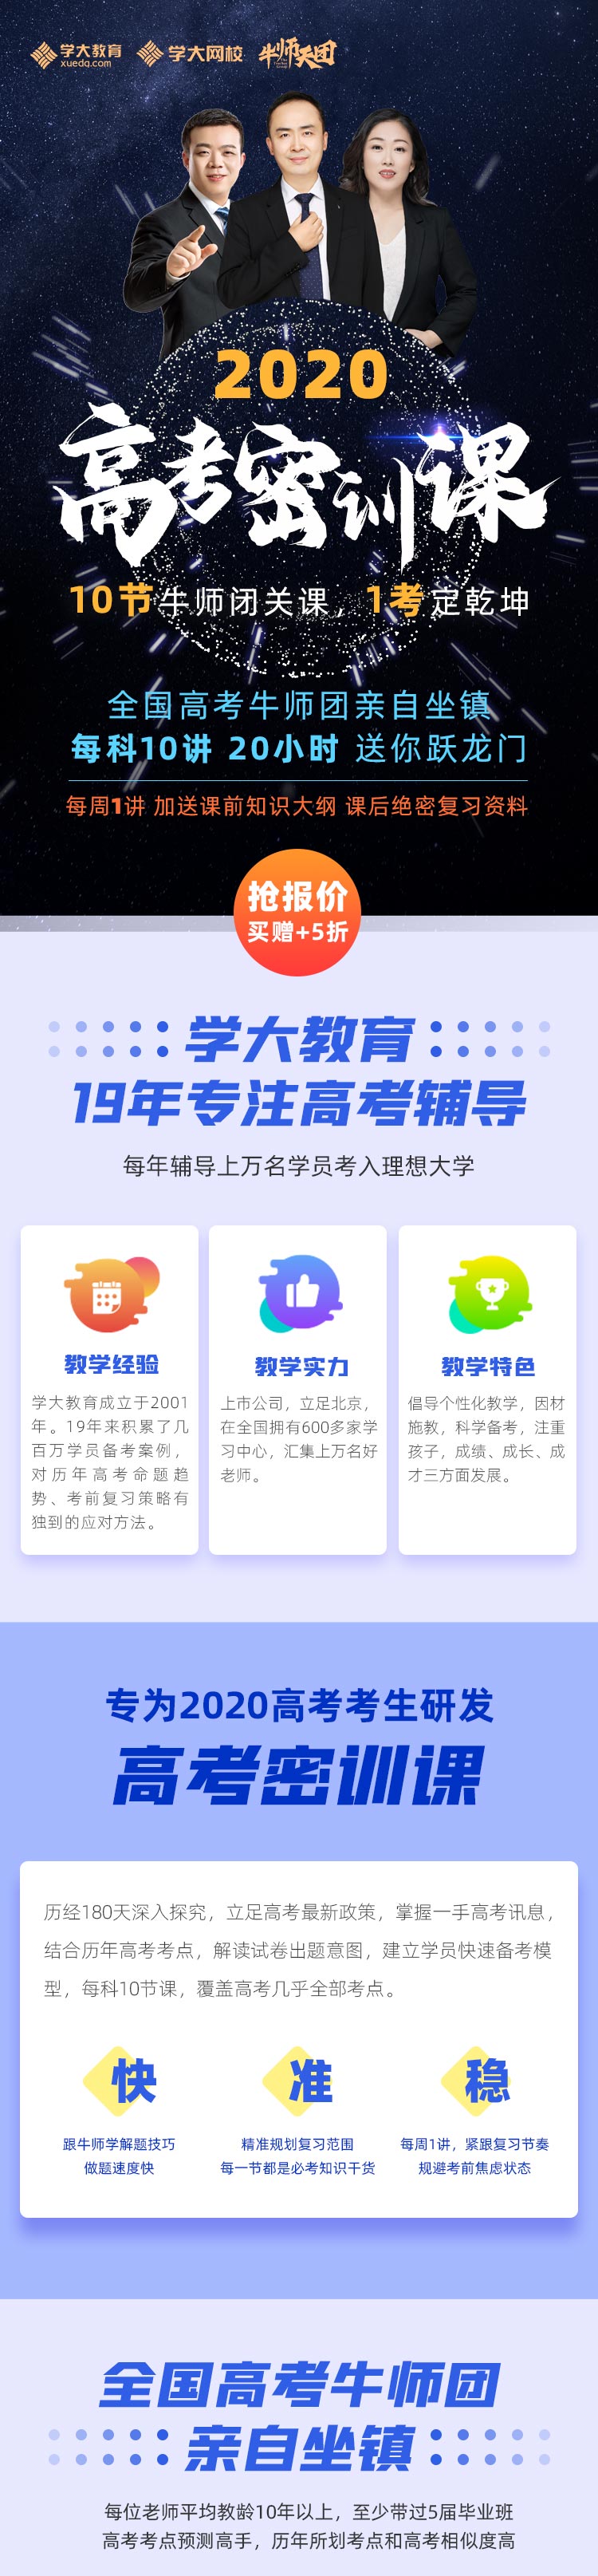 https://xdo-storage.oss-cn-beijing.aliyuncs.com/2020/03/09/LgsL4W3e1VuLdMJBbK9emWif1idKTaYO0PBsECbC.jpeg